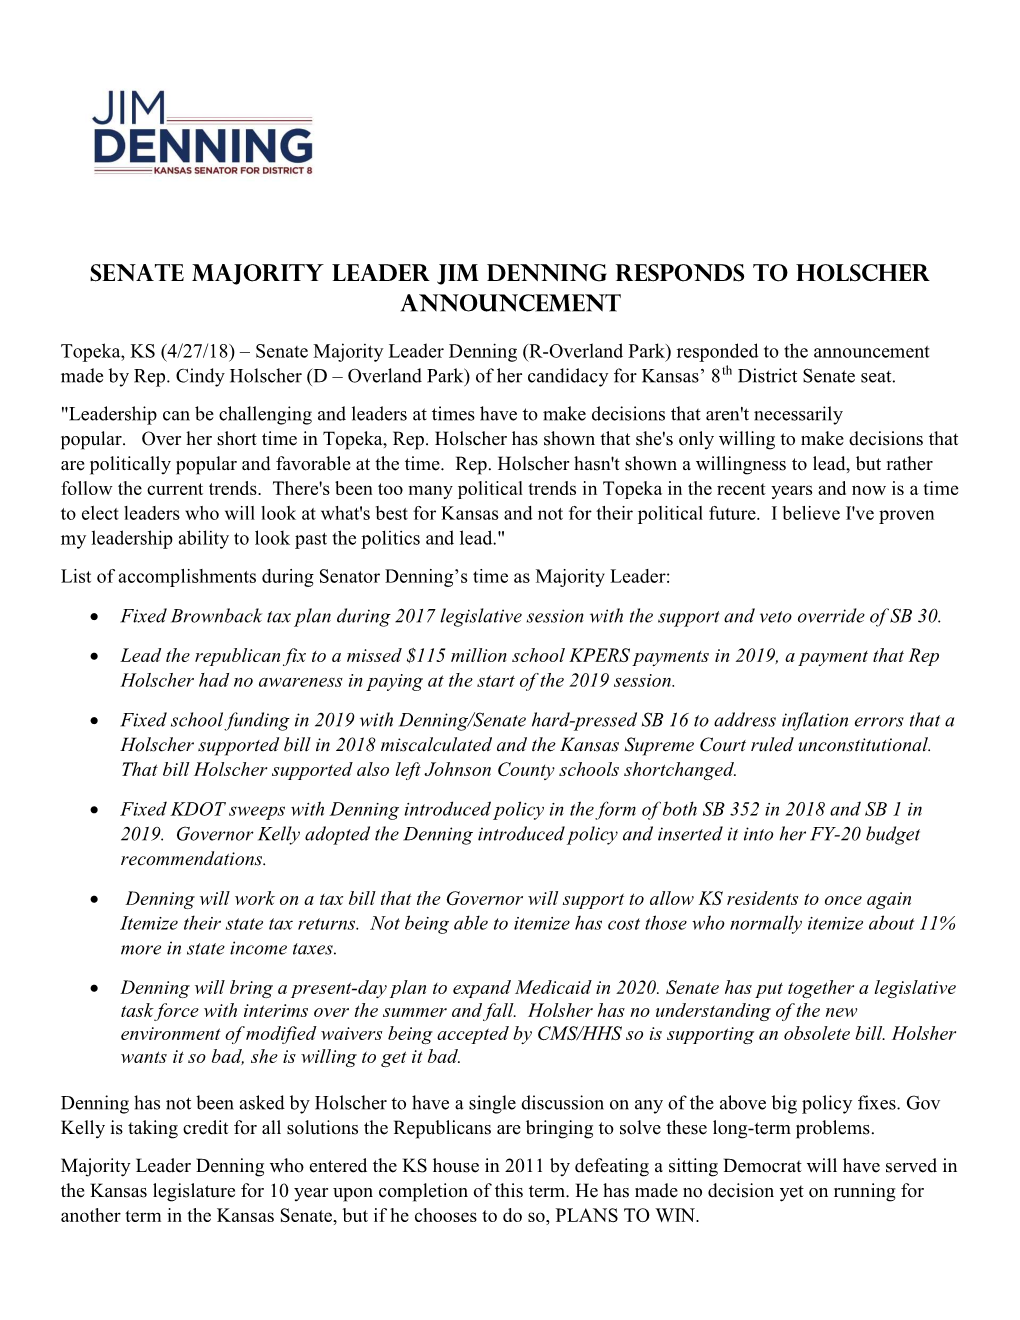 Senate Majority Leader Jim Denning Responds to Holscher Announcement